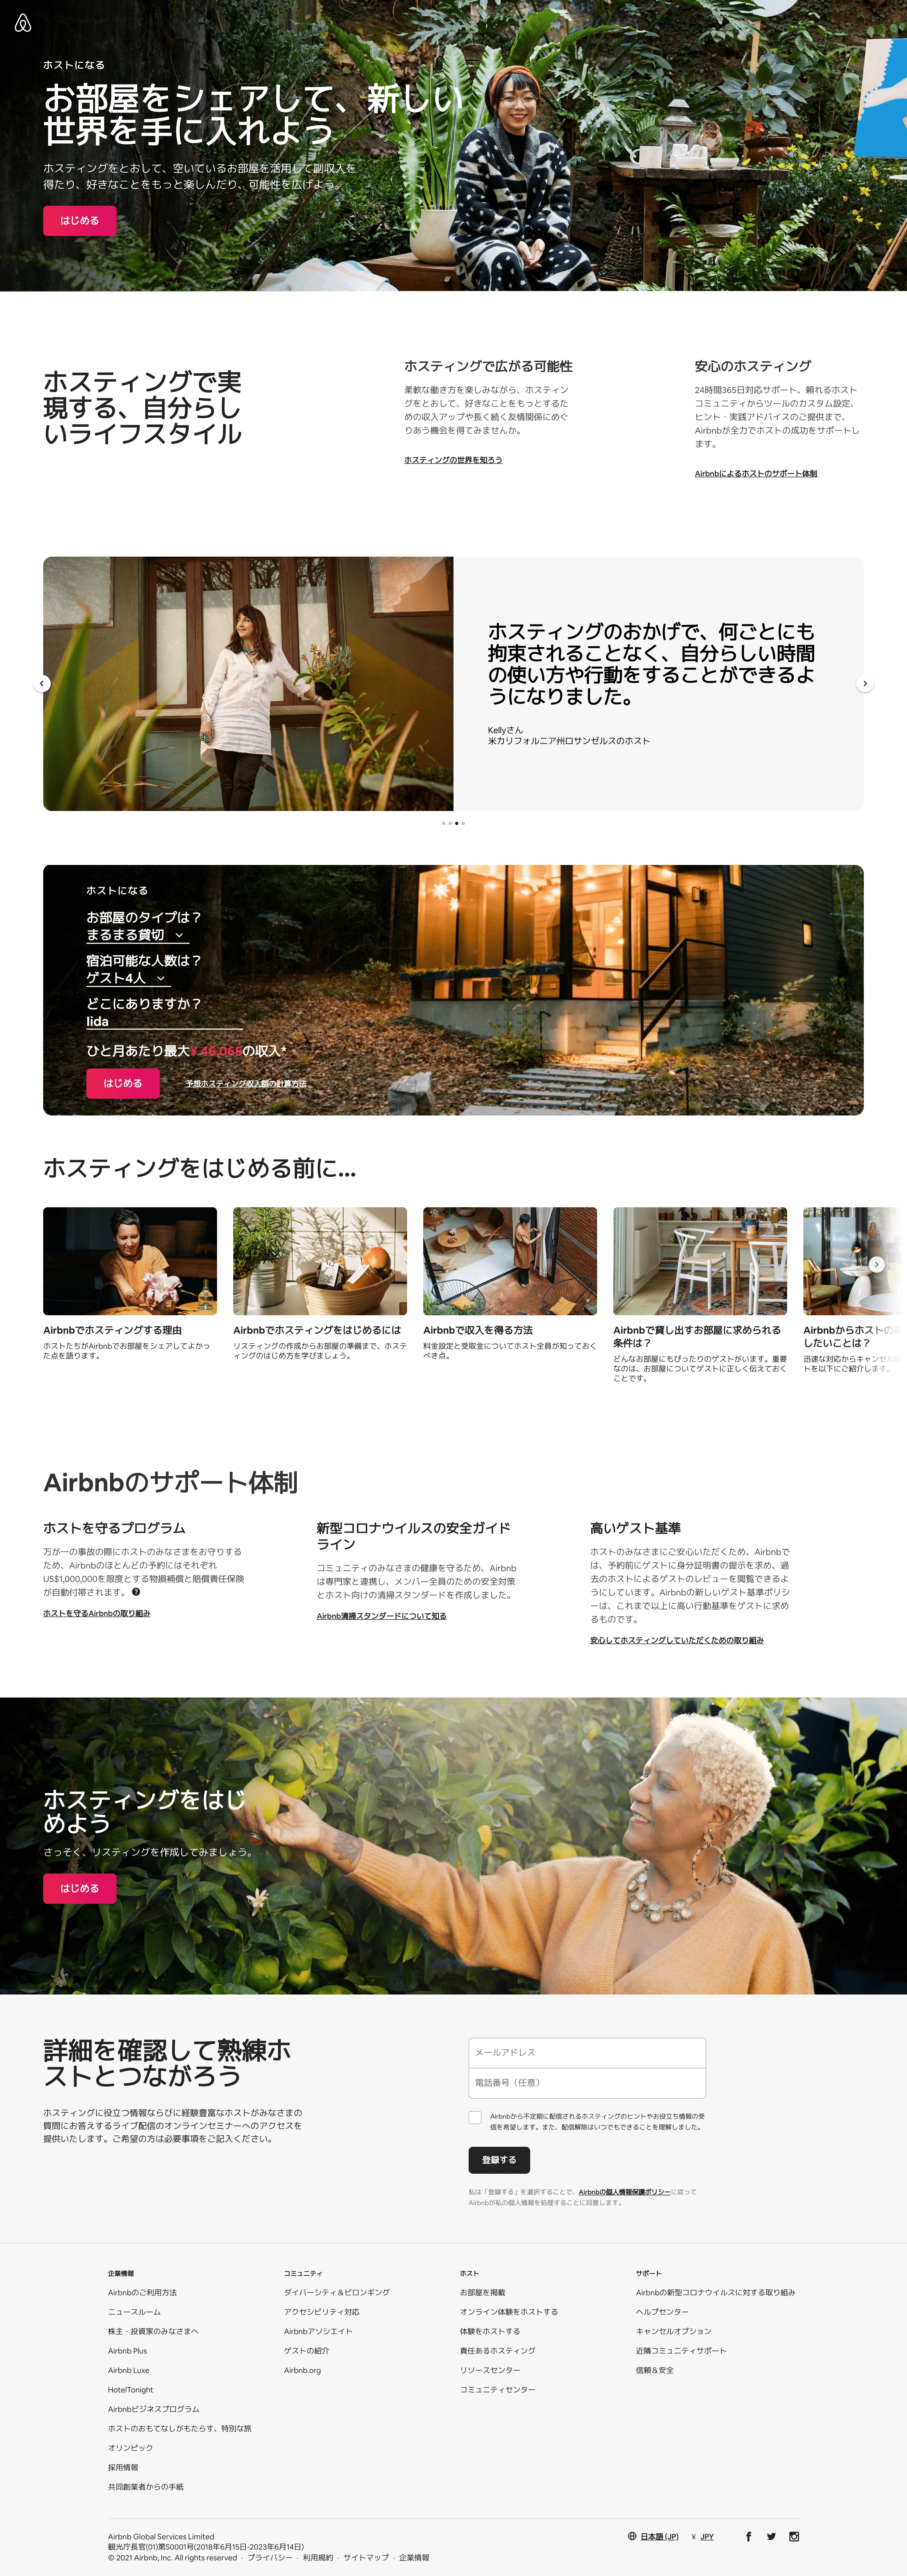 airbnb画像